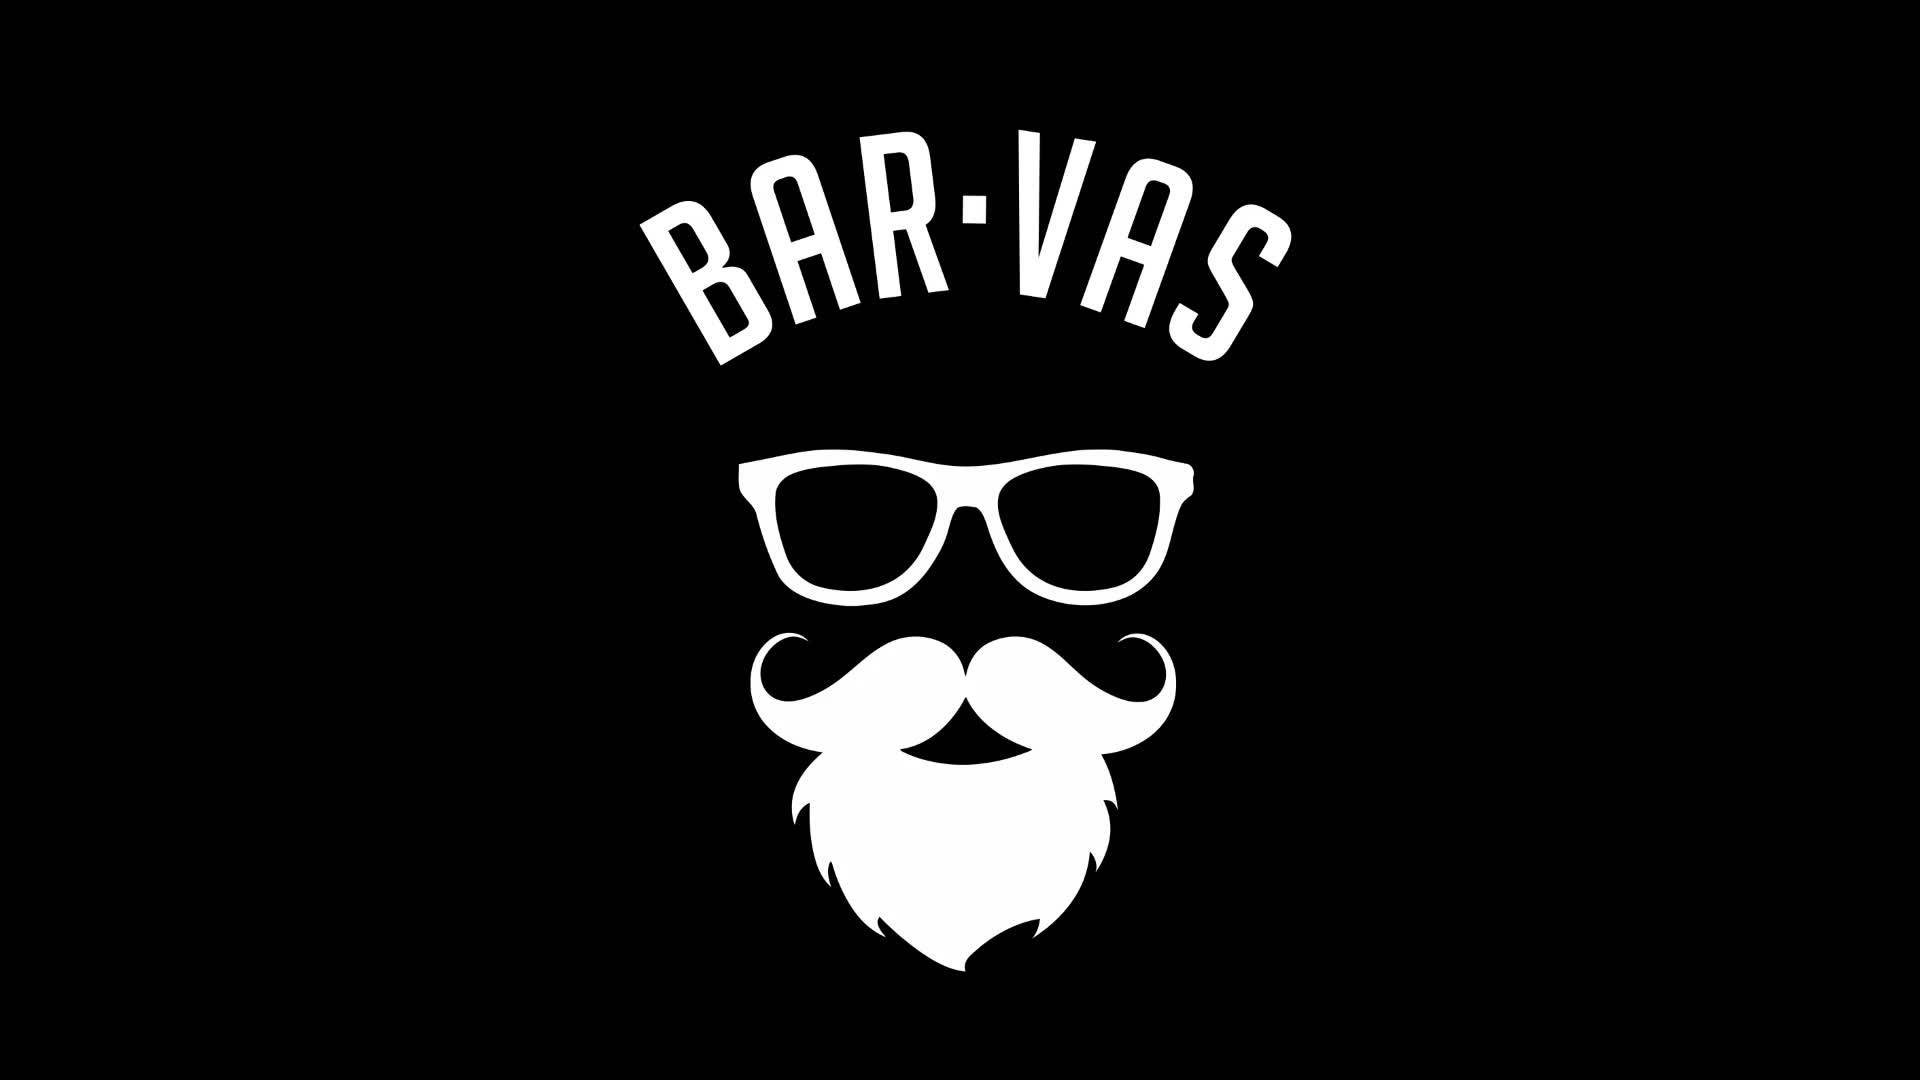 Hipster Bar Vas Beard Logo Picture